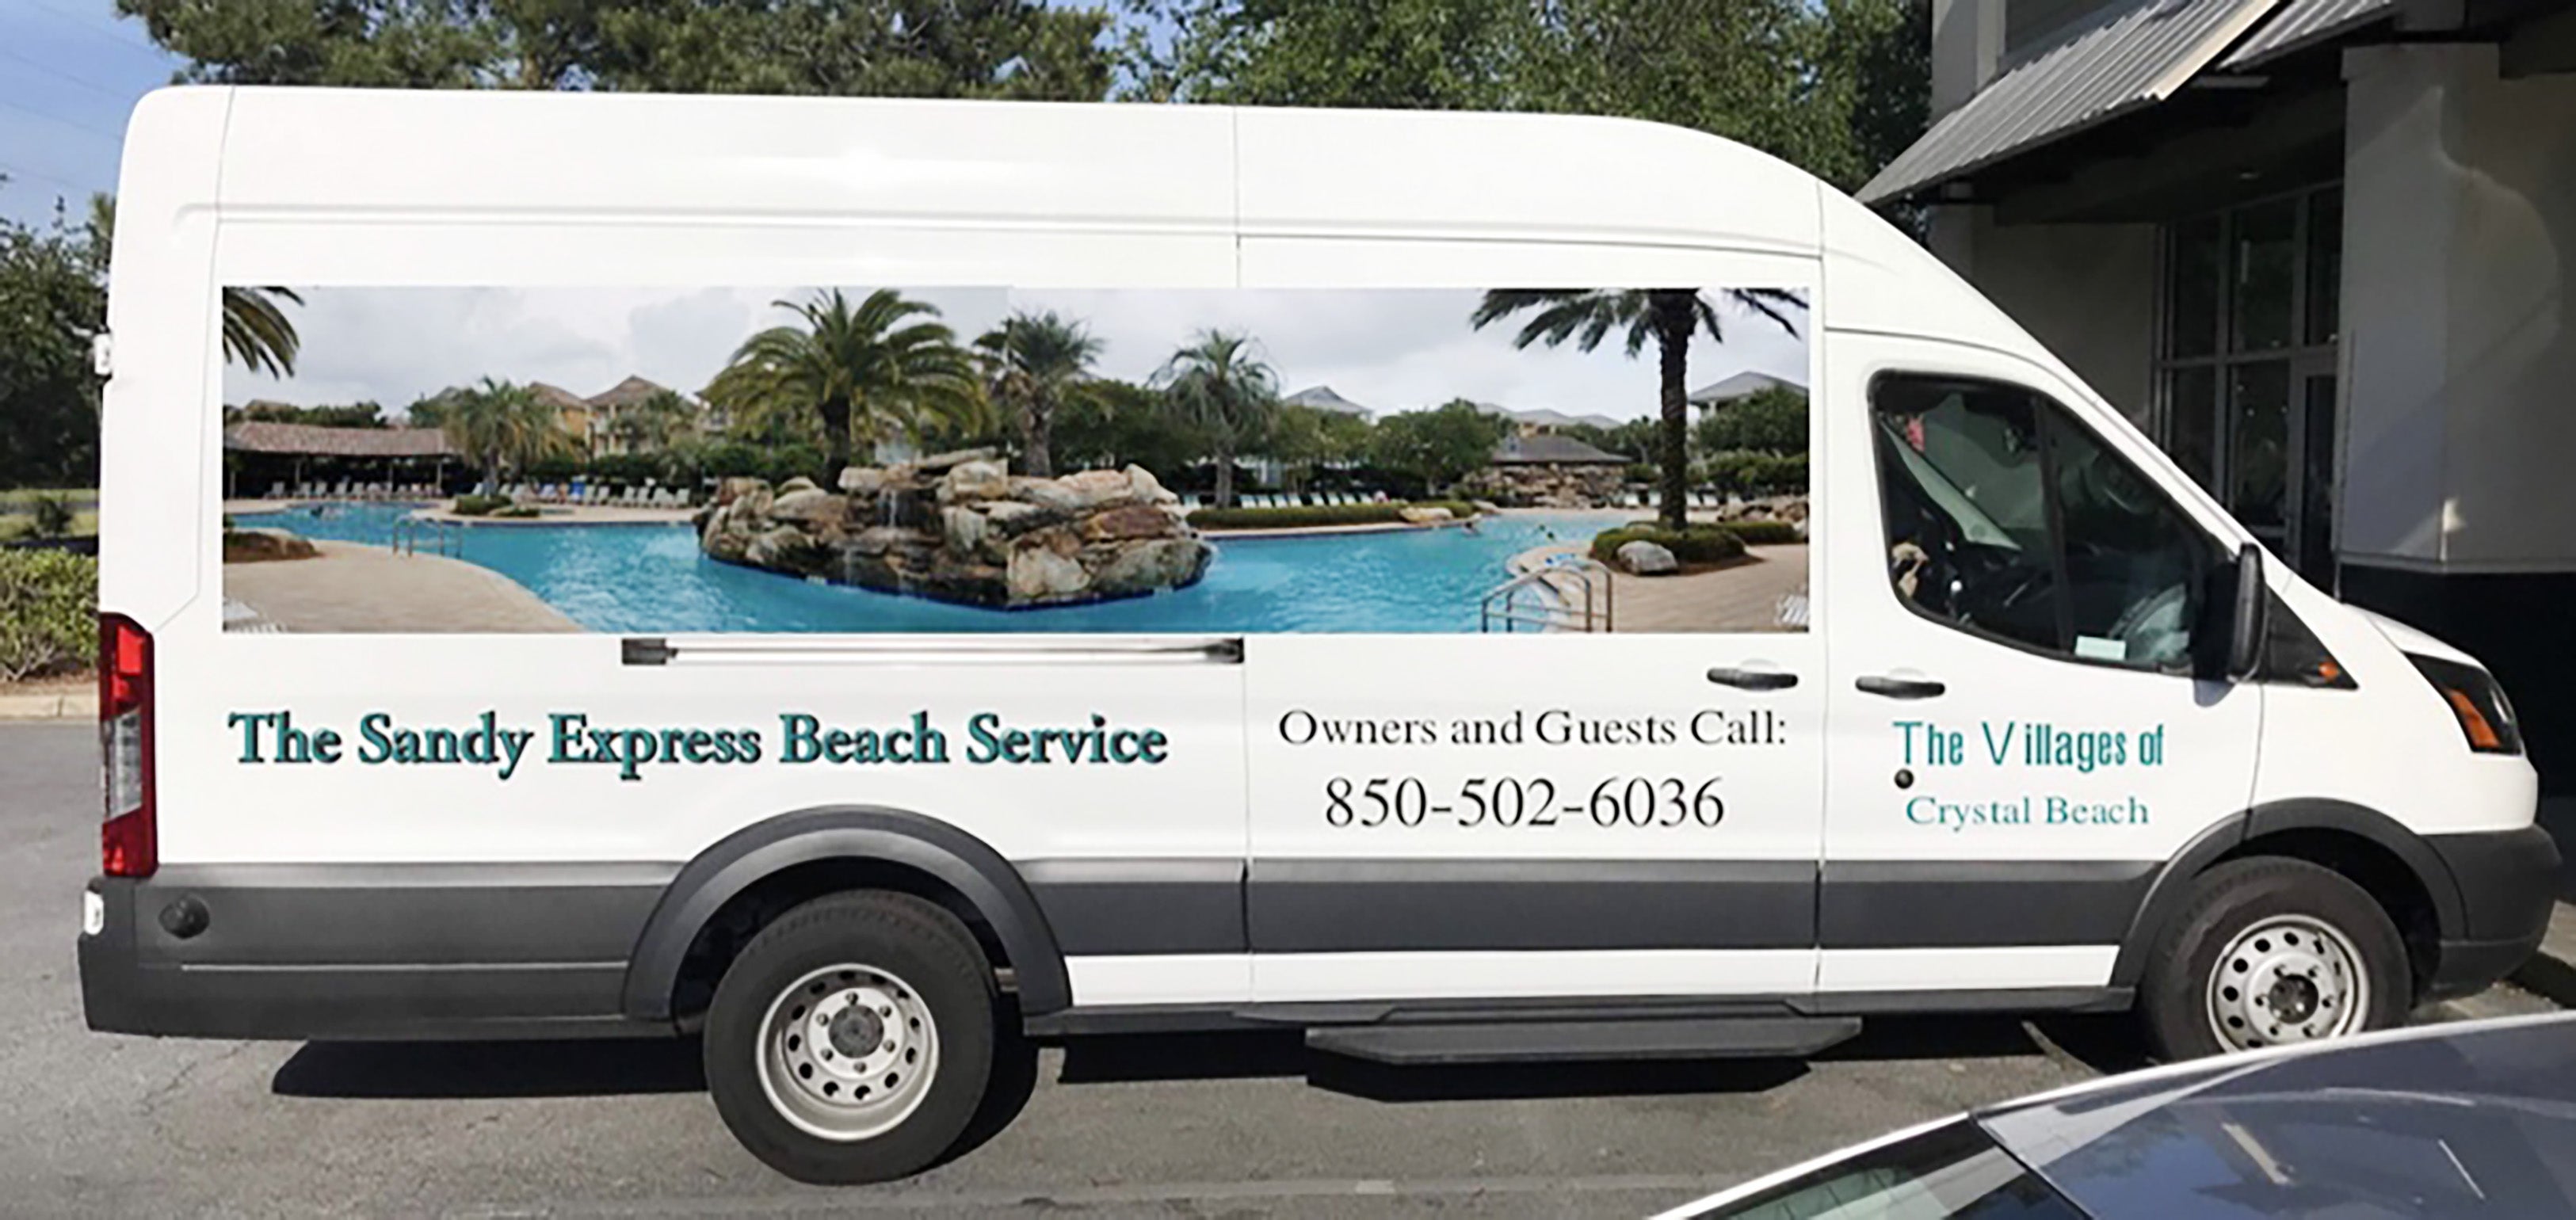 The Sandy Express Beach Service